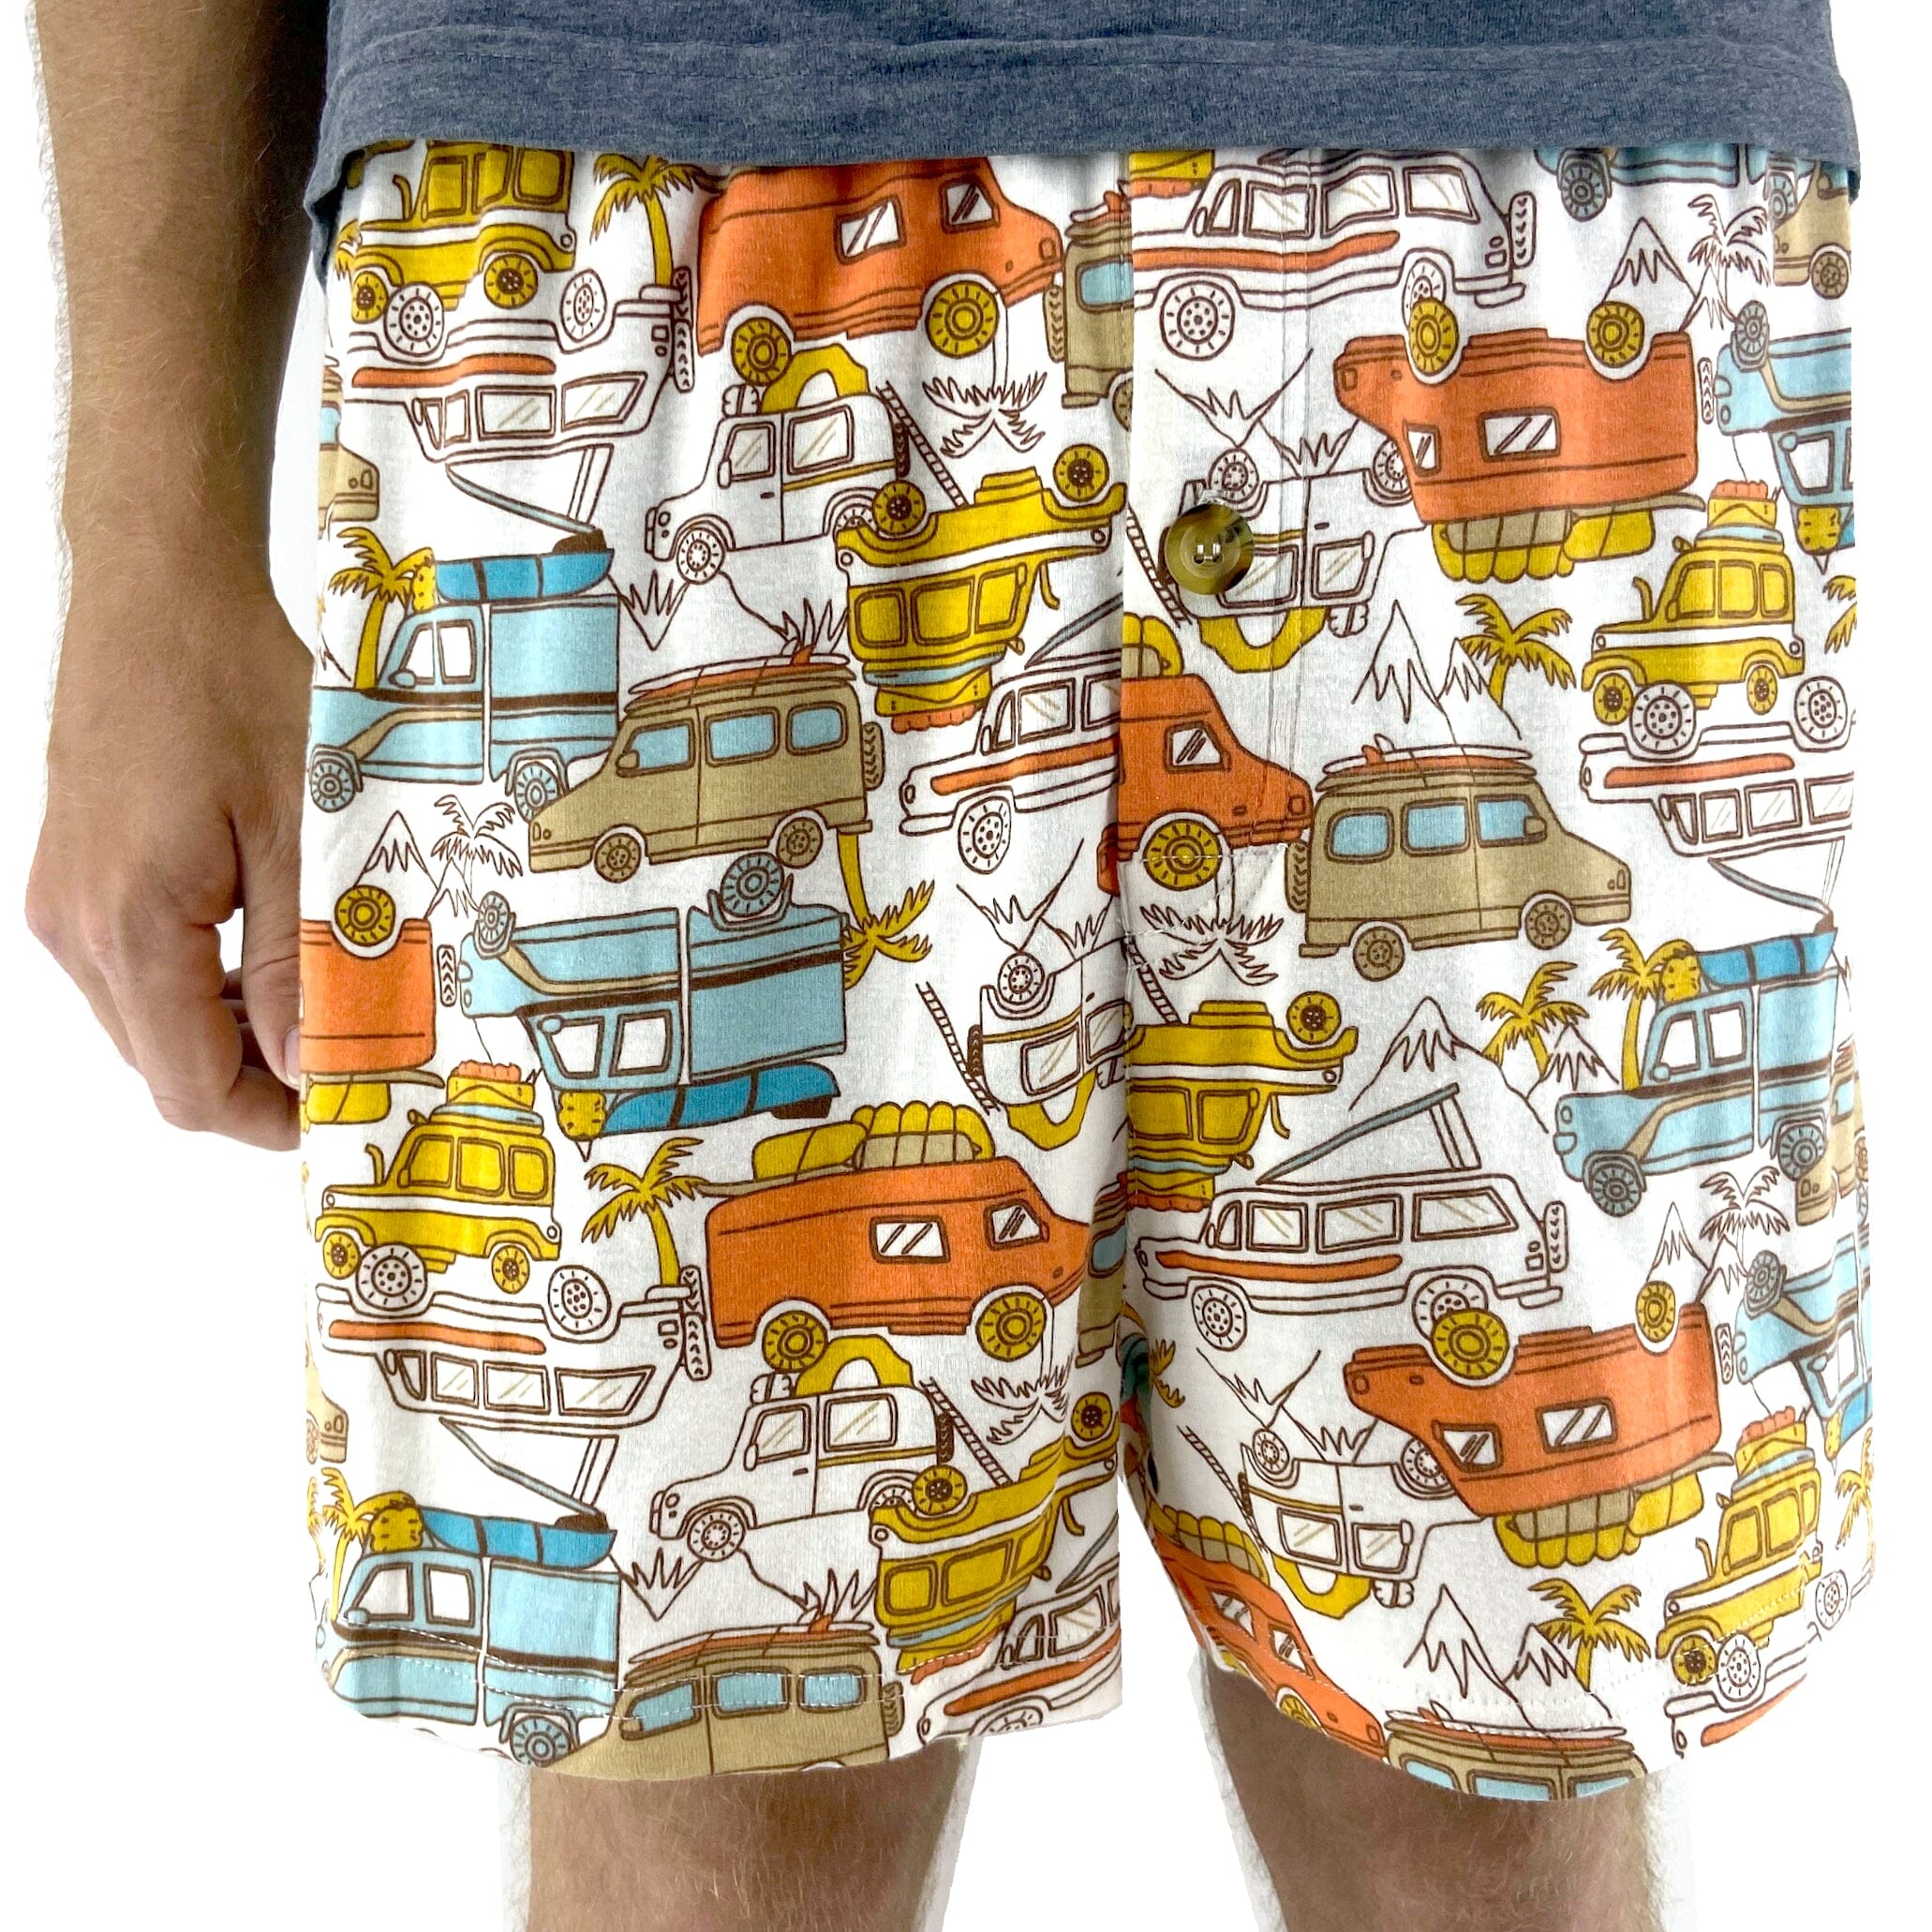 Shop Men's Cotton Stretch Knit Boxer Shorts in Colorful & Cool Prints!